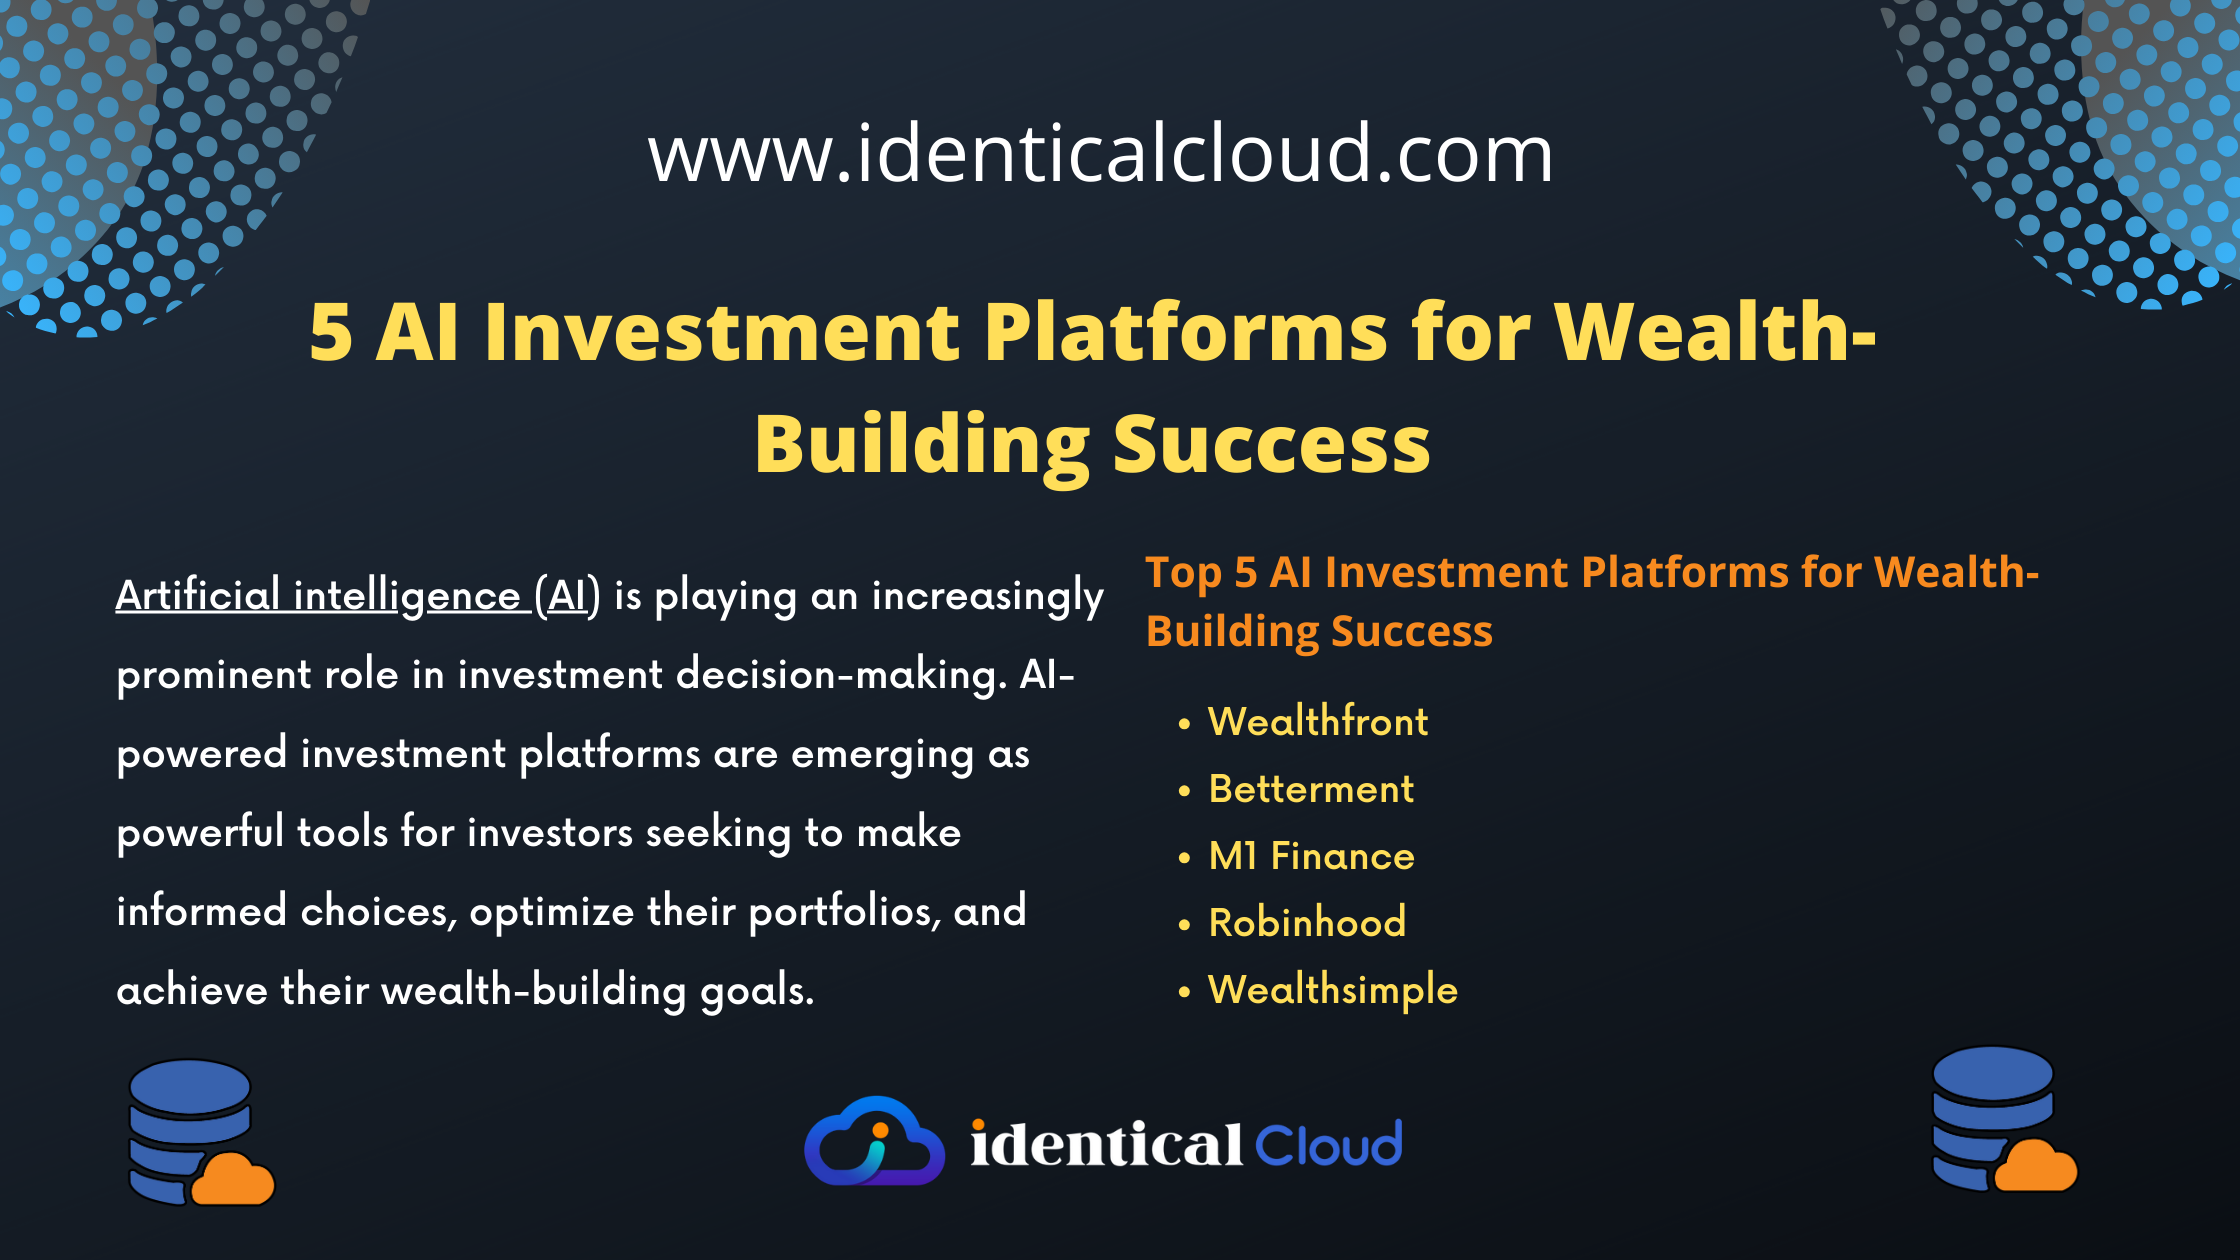 5 AI Investment Platforms for Wealth-Building Success - identicalcloud.com